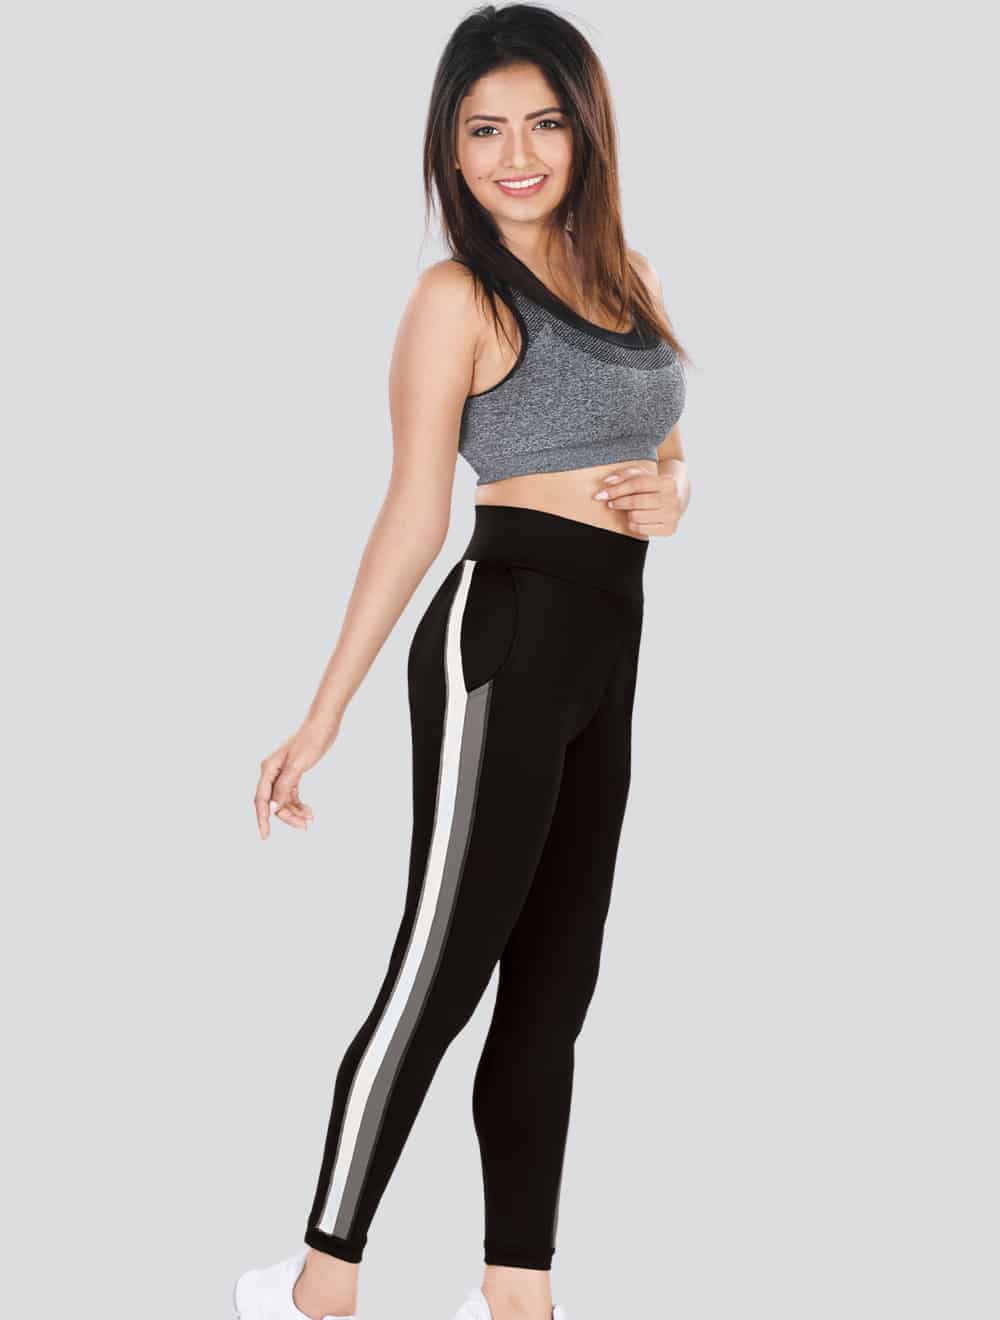 Dermawear Womens Active Gym Workout Pants  Yoga Pants